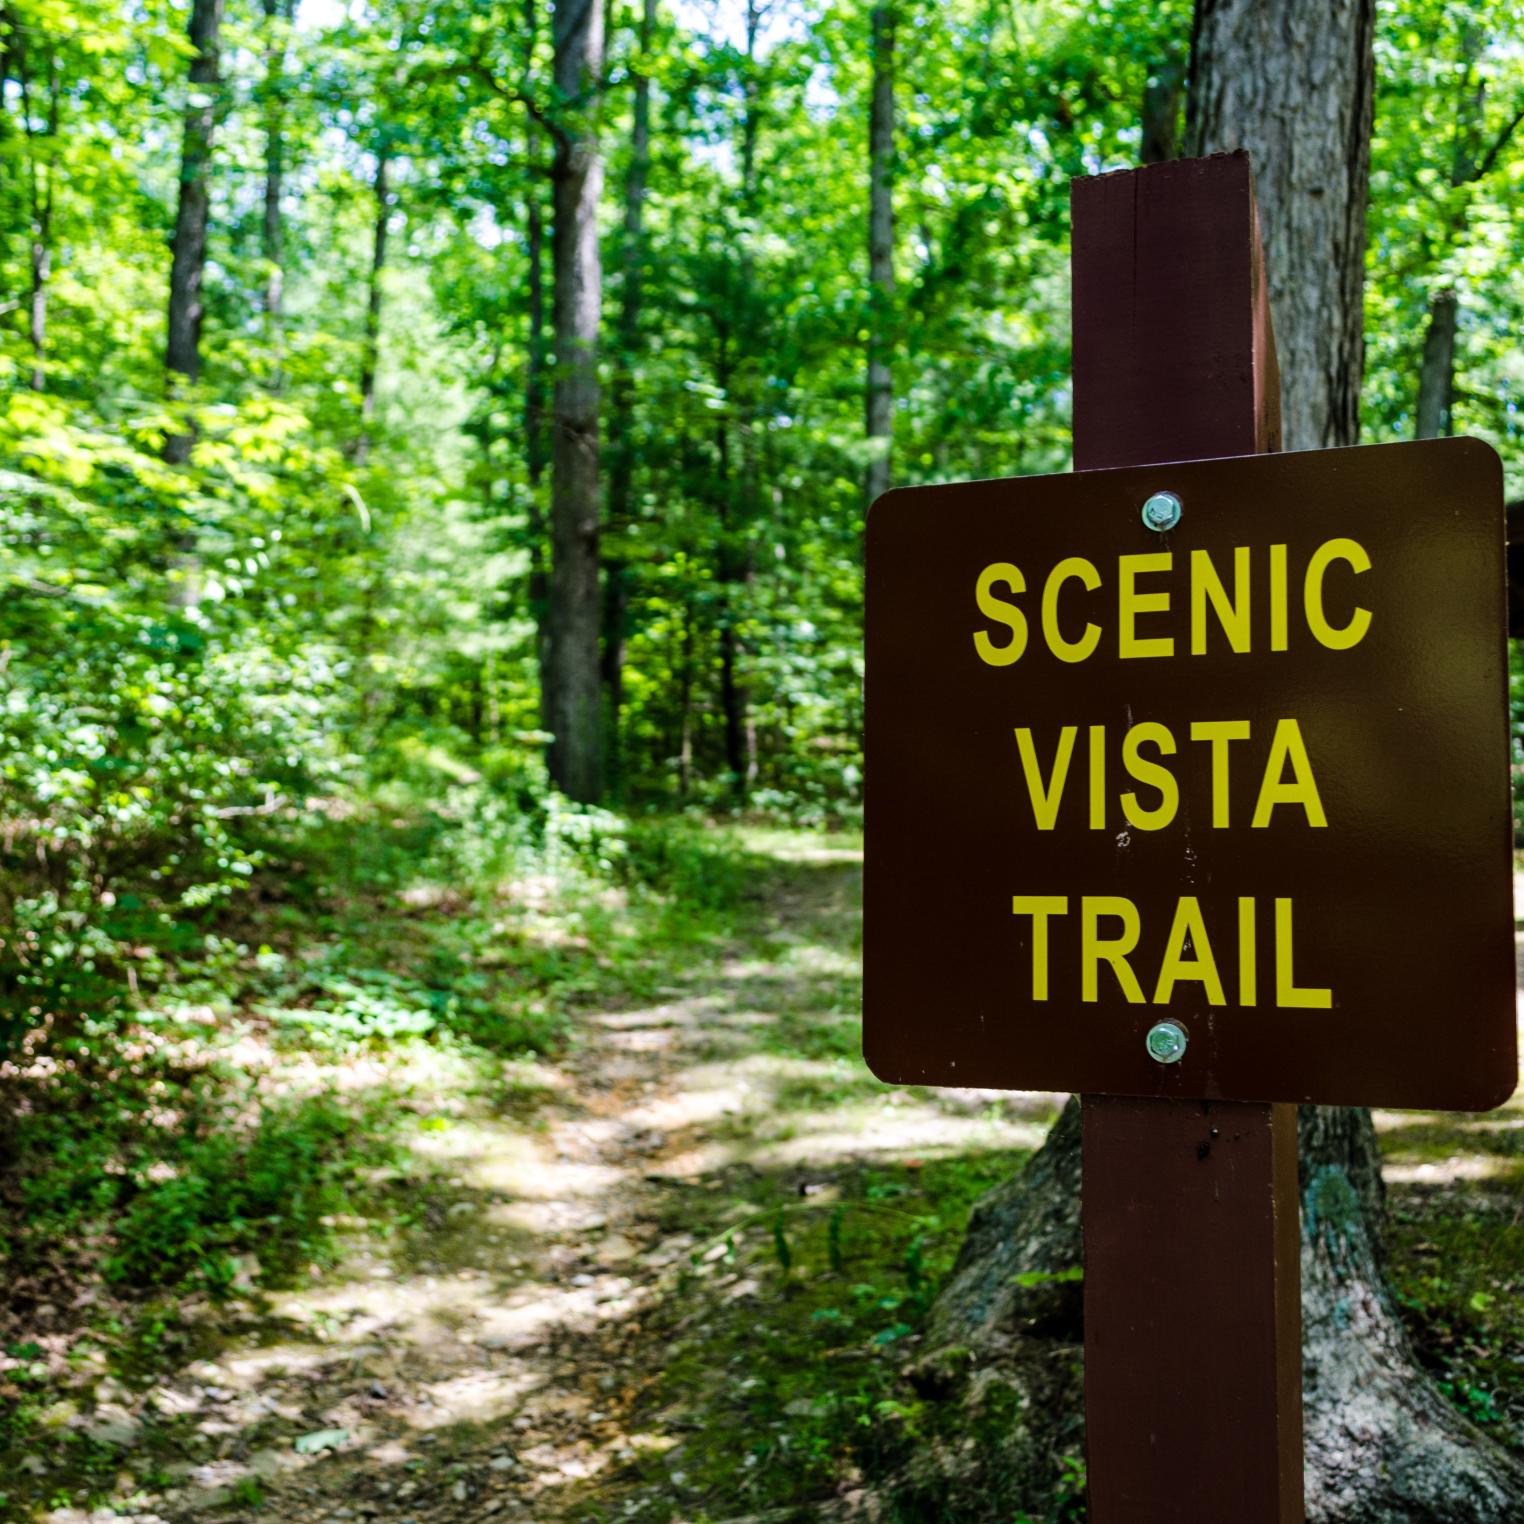 Scenic Vista Trail @ Kings Gap